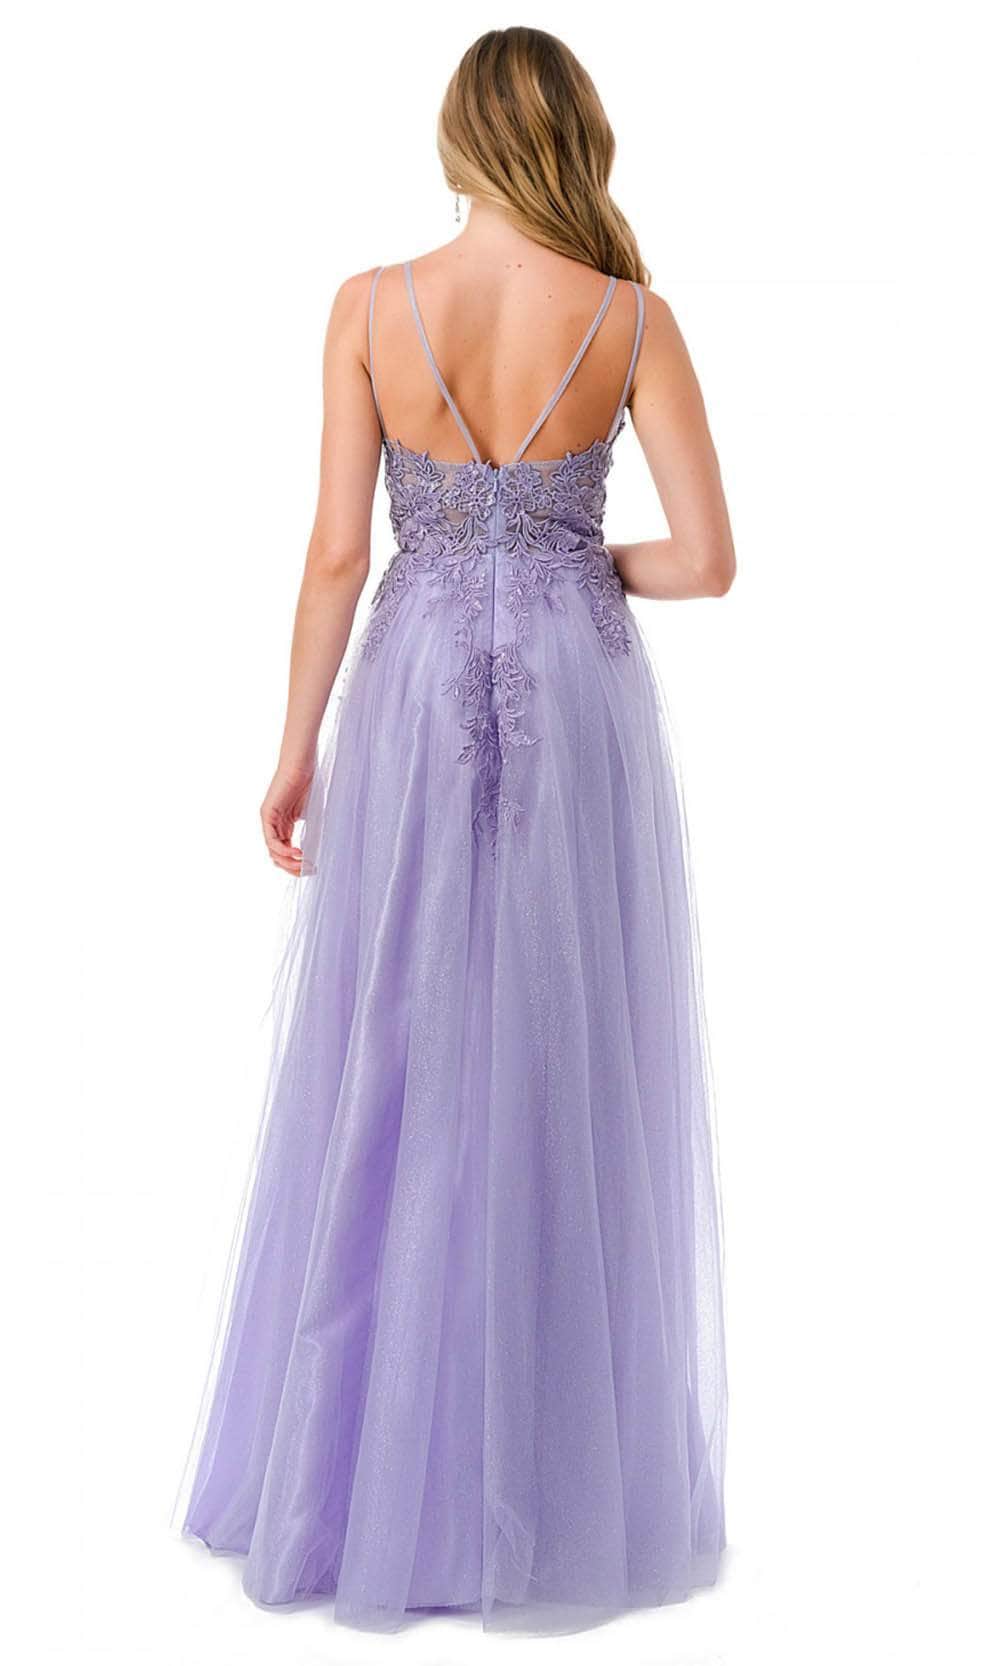 Aspeed Design L2790W - Sleeveless Evening Gown